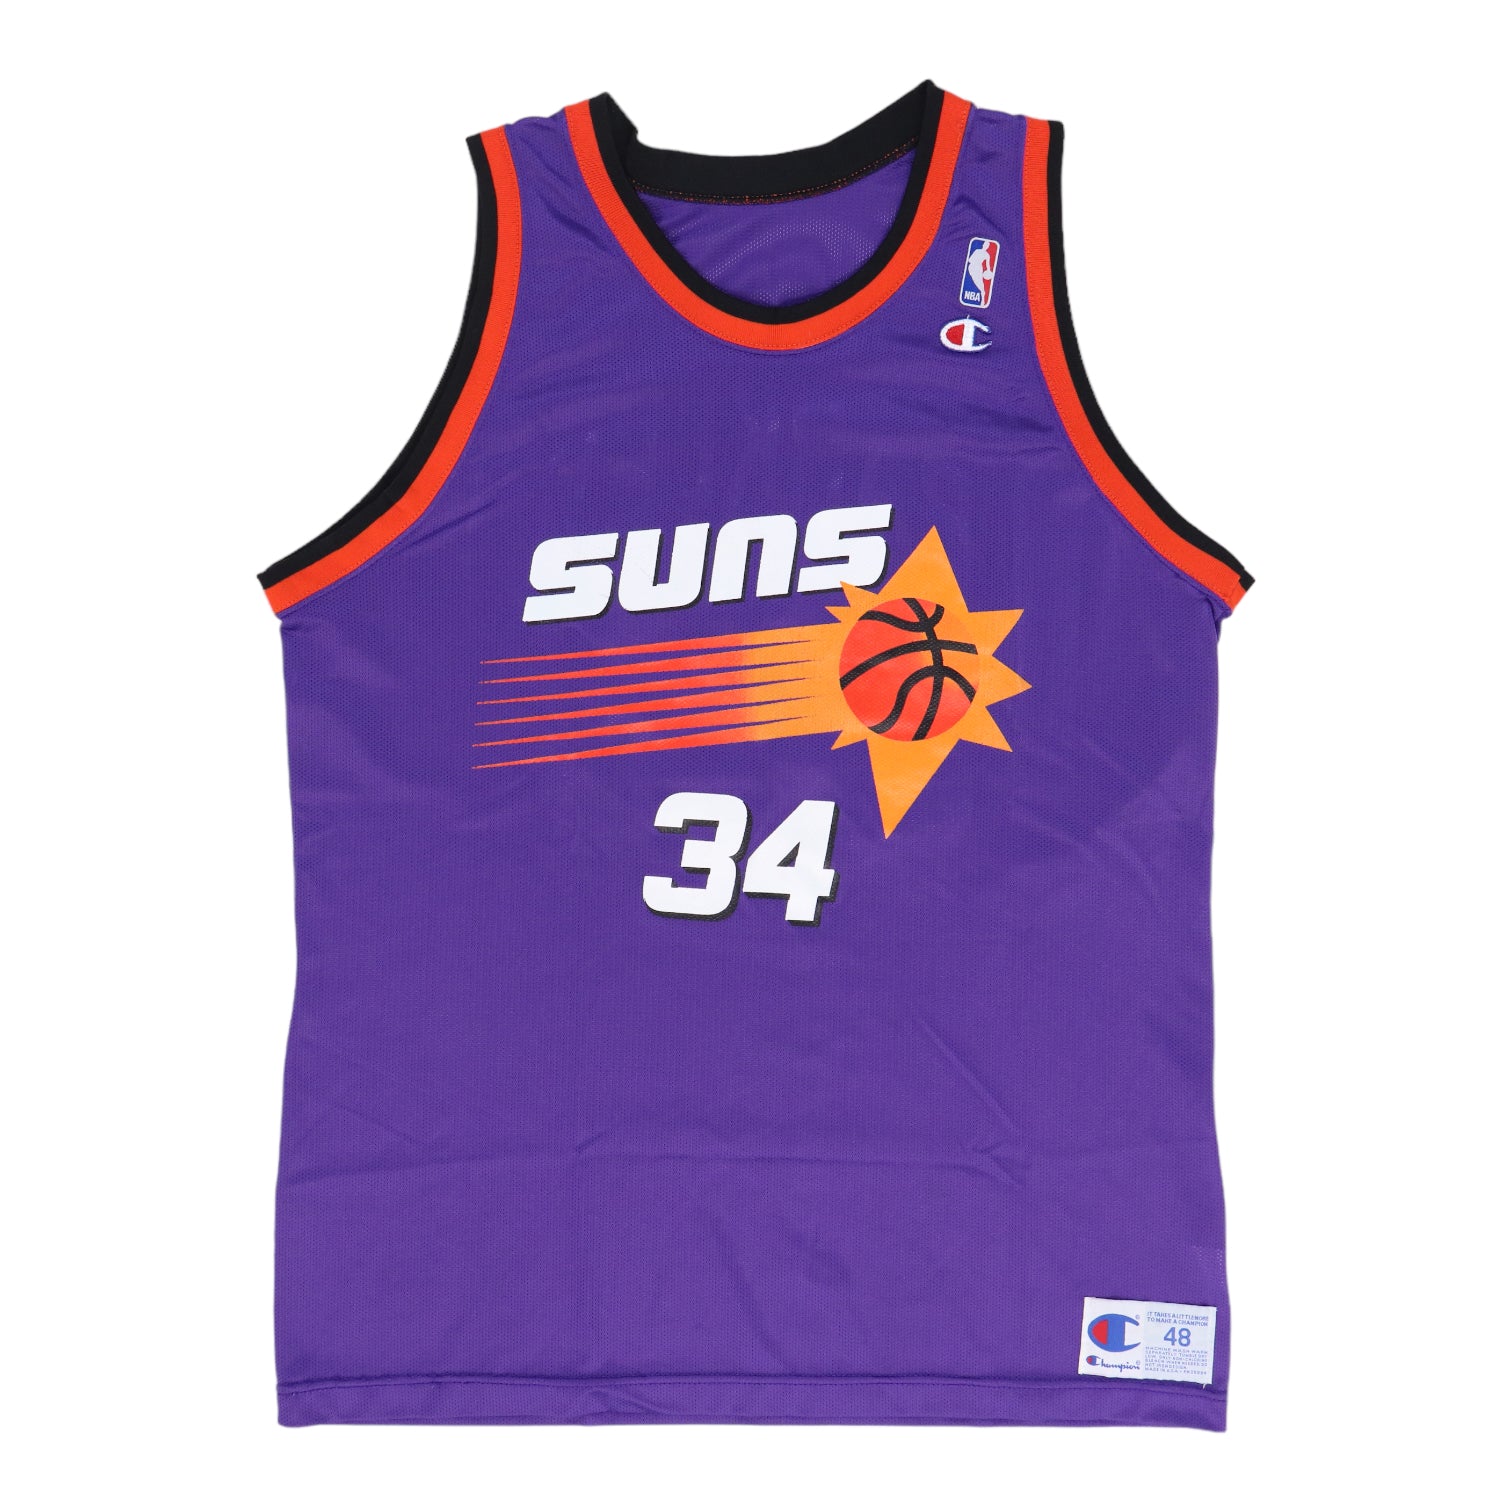 Champion Phoenix Suns jersey 34 Charles Barkley NBA purple home